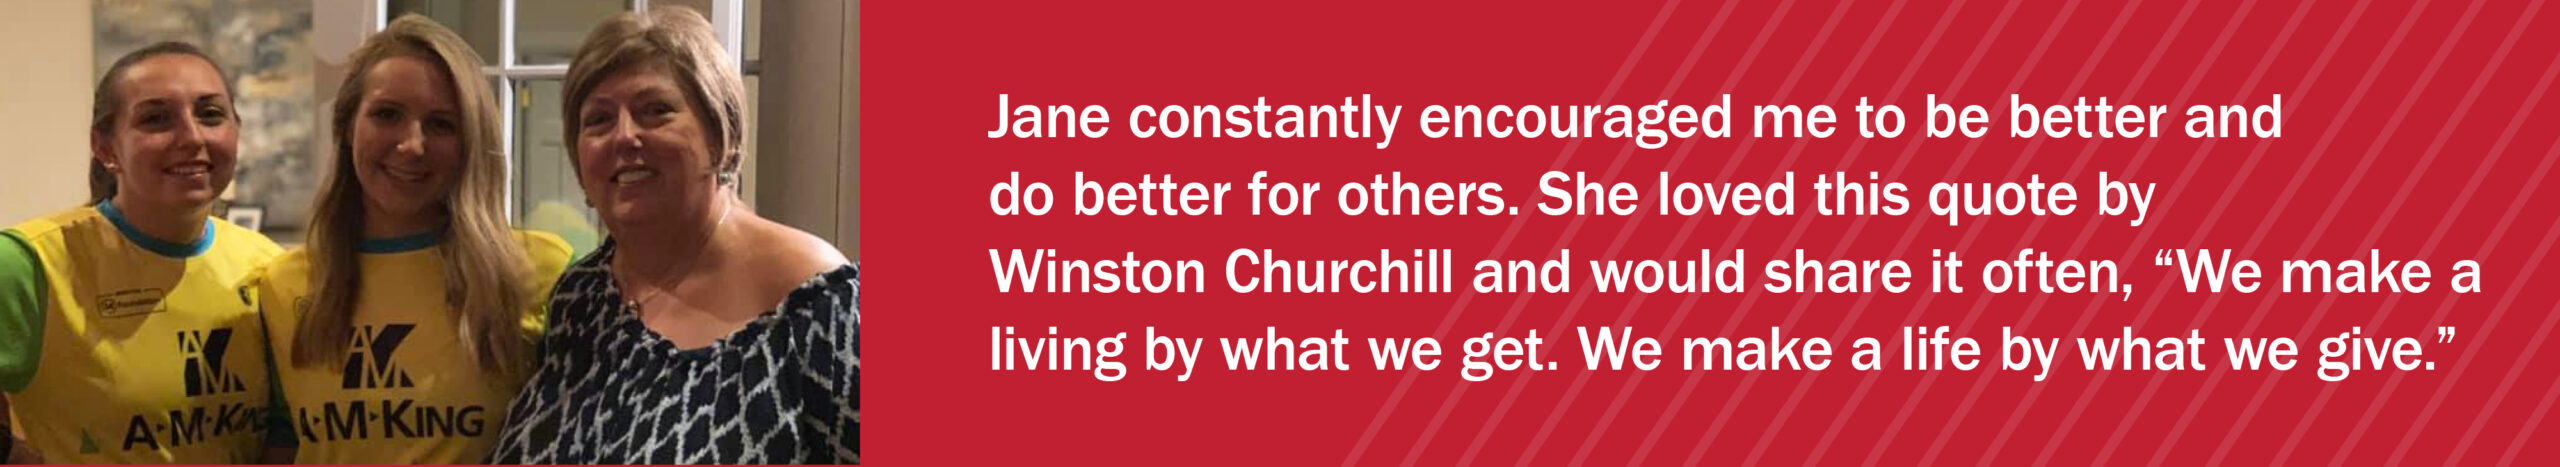 Community Engagement: Winston Churchill quote